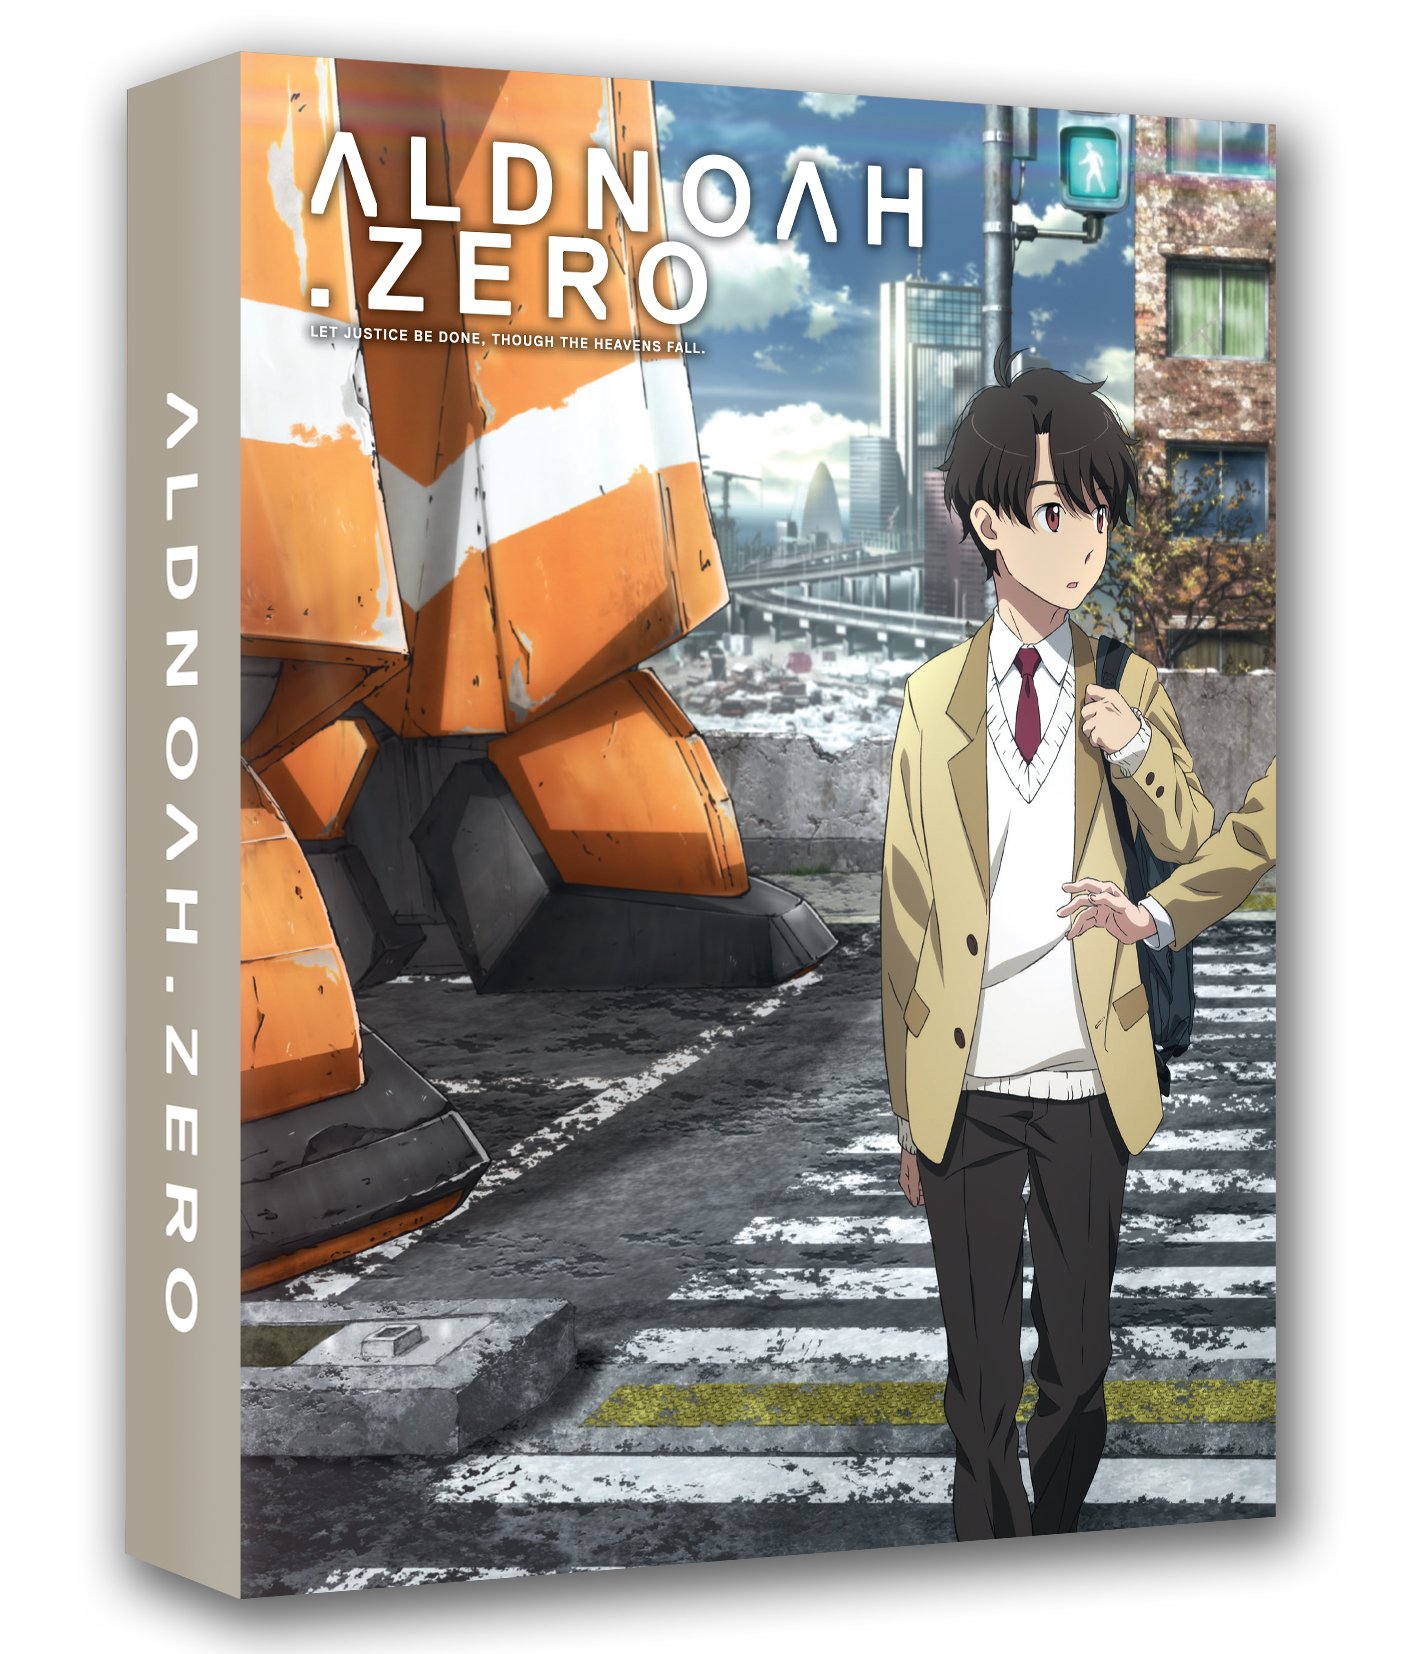 Aldnoah.Zero Season 2 EP 1 - 12 End DVD English Subtitle